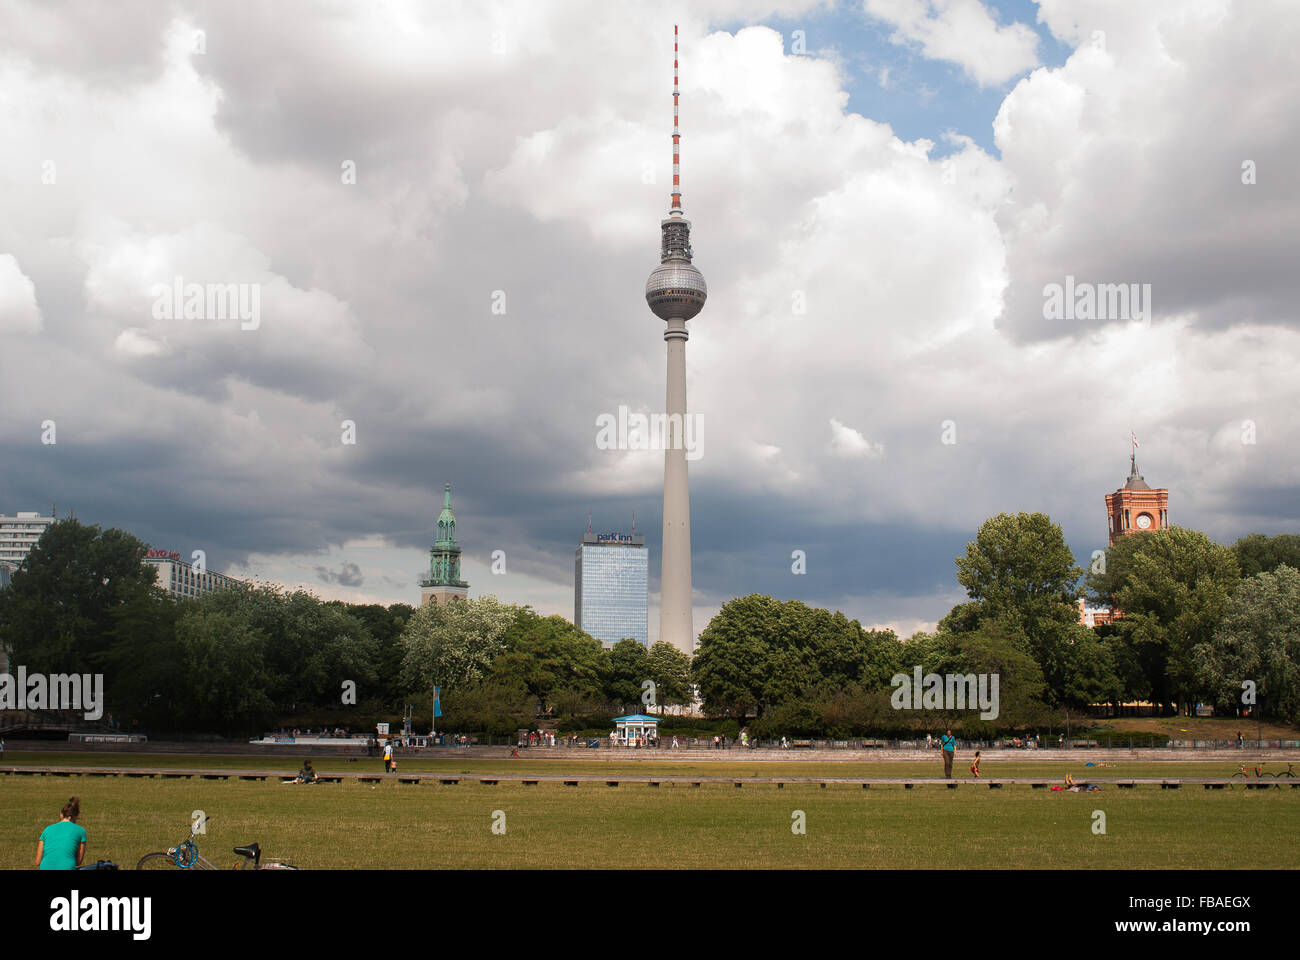 BERLIN - Juli 25: Den Fernsehturm oder Fernsehturm am 25. Juli 2010 in Berlin Alexanderplatz und das Rotes Rathaus Stockfoto